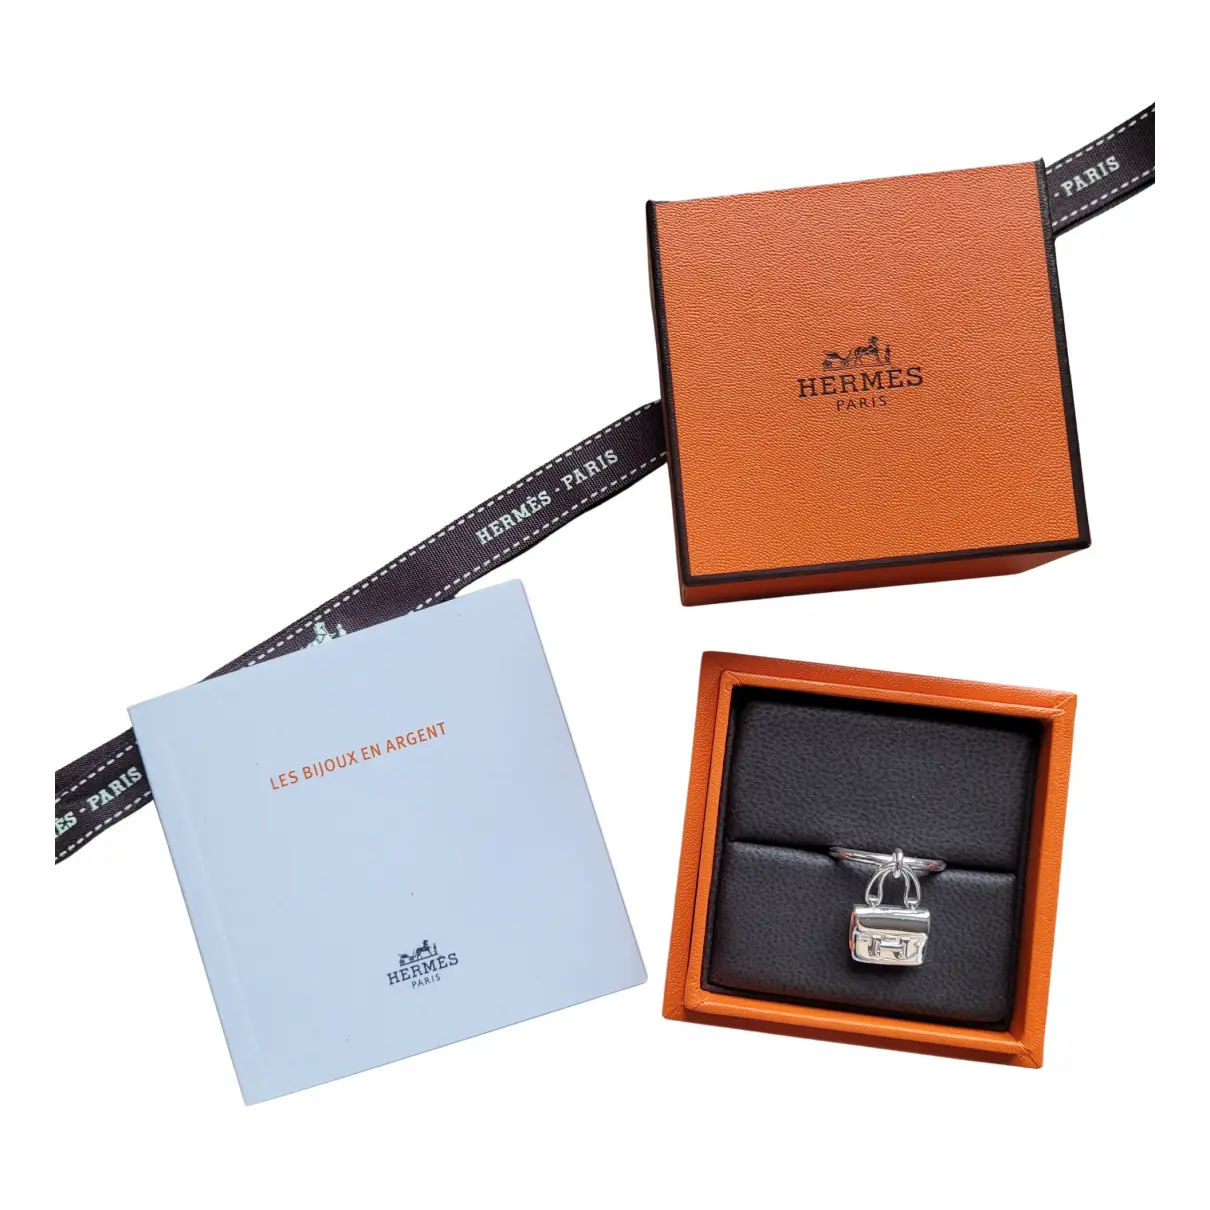 Buy Hermès Amulette silver ring online